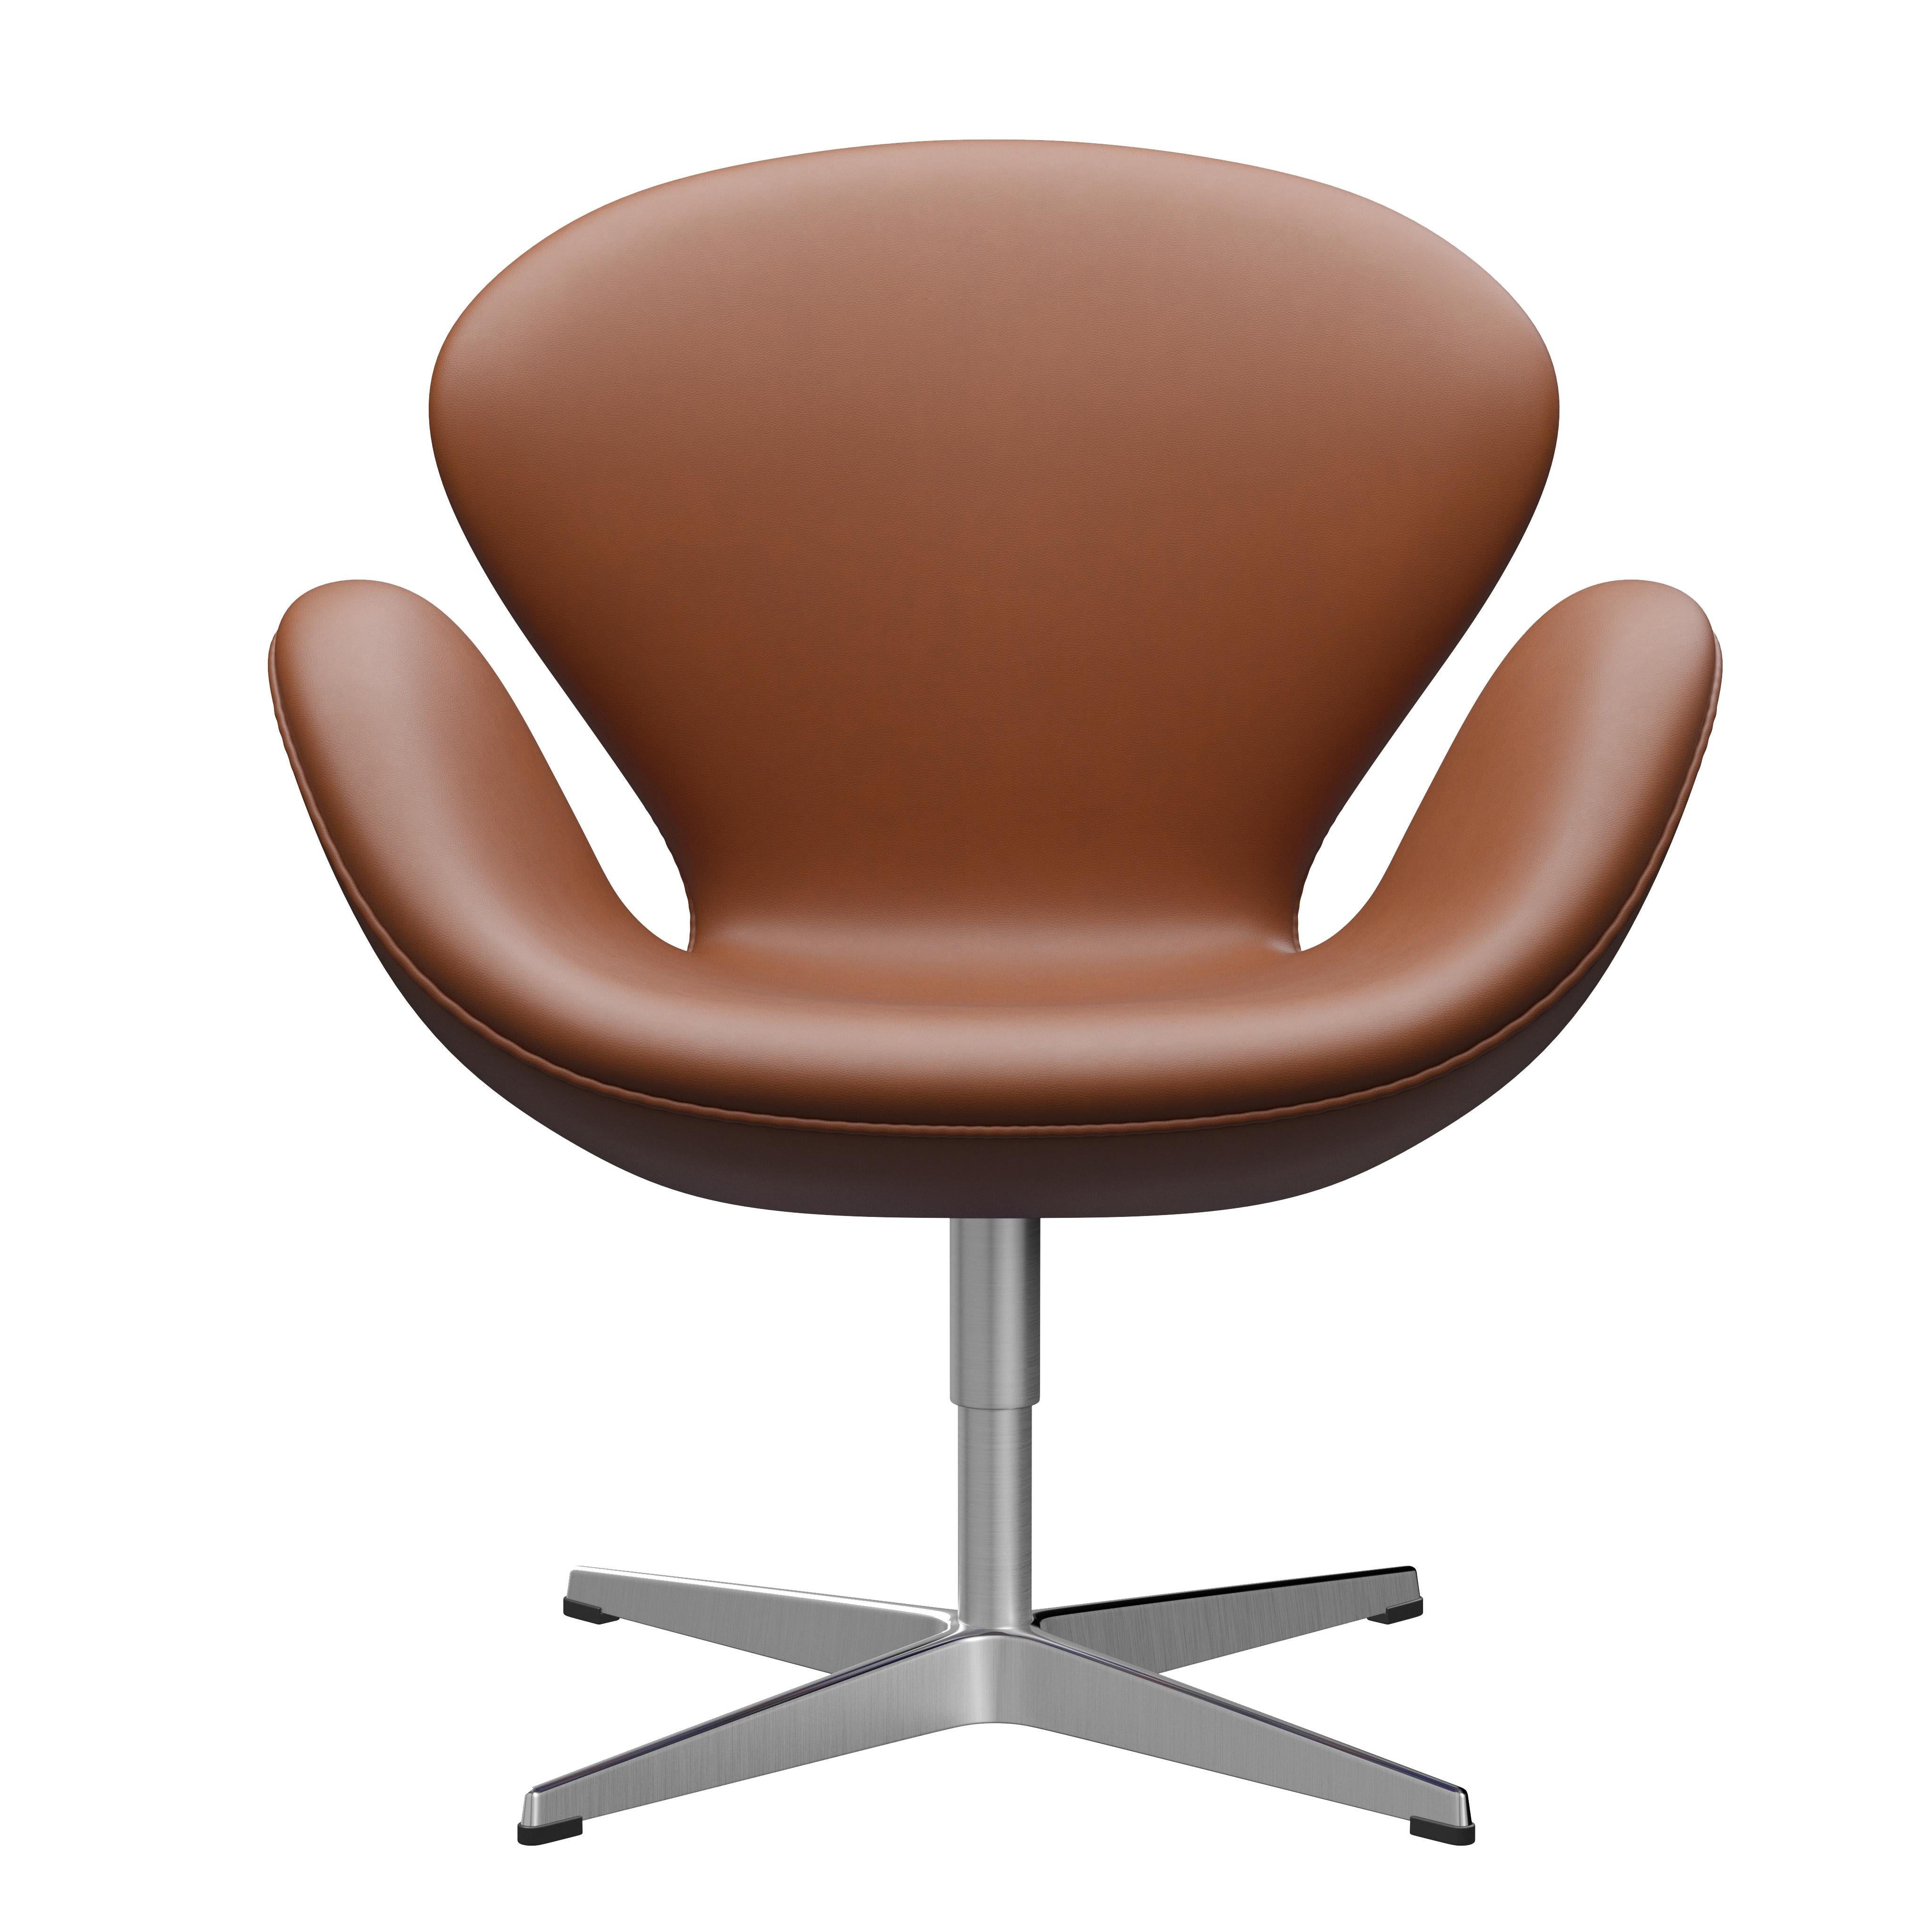 Arne Jacobsen 'Swan' Chair for Fritz Hansen in Leather Upholstery (Cat. 3) For Sale 11